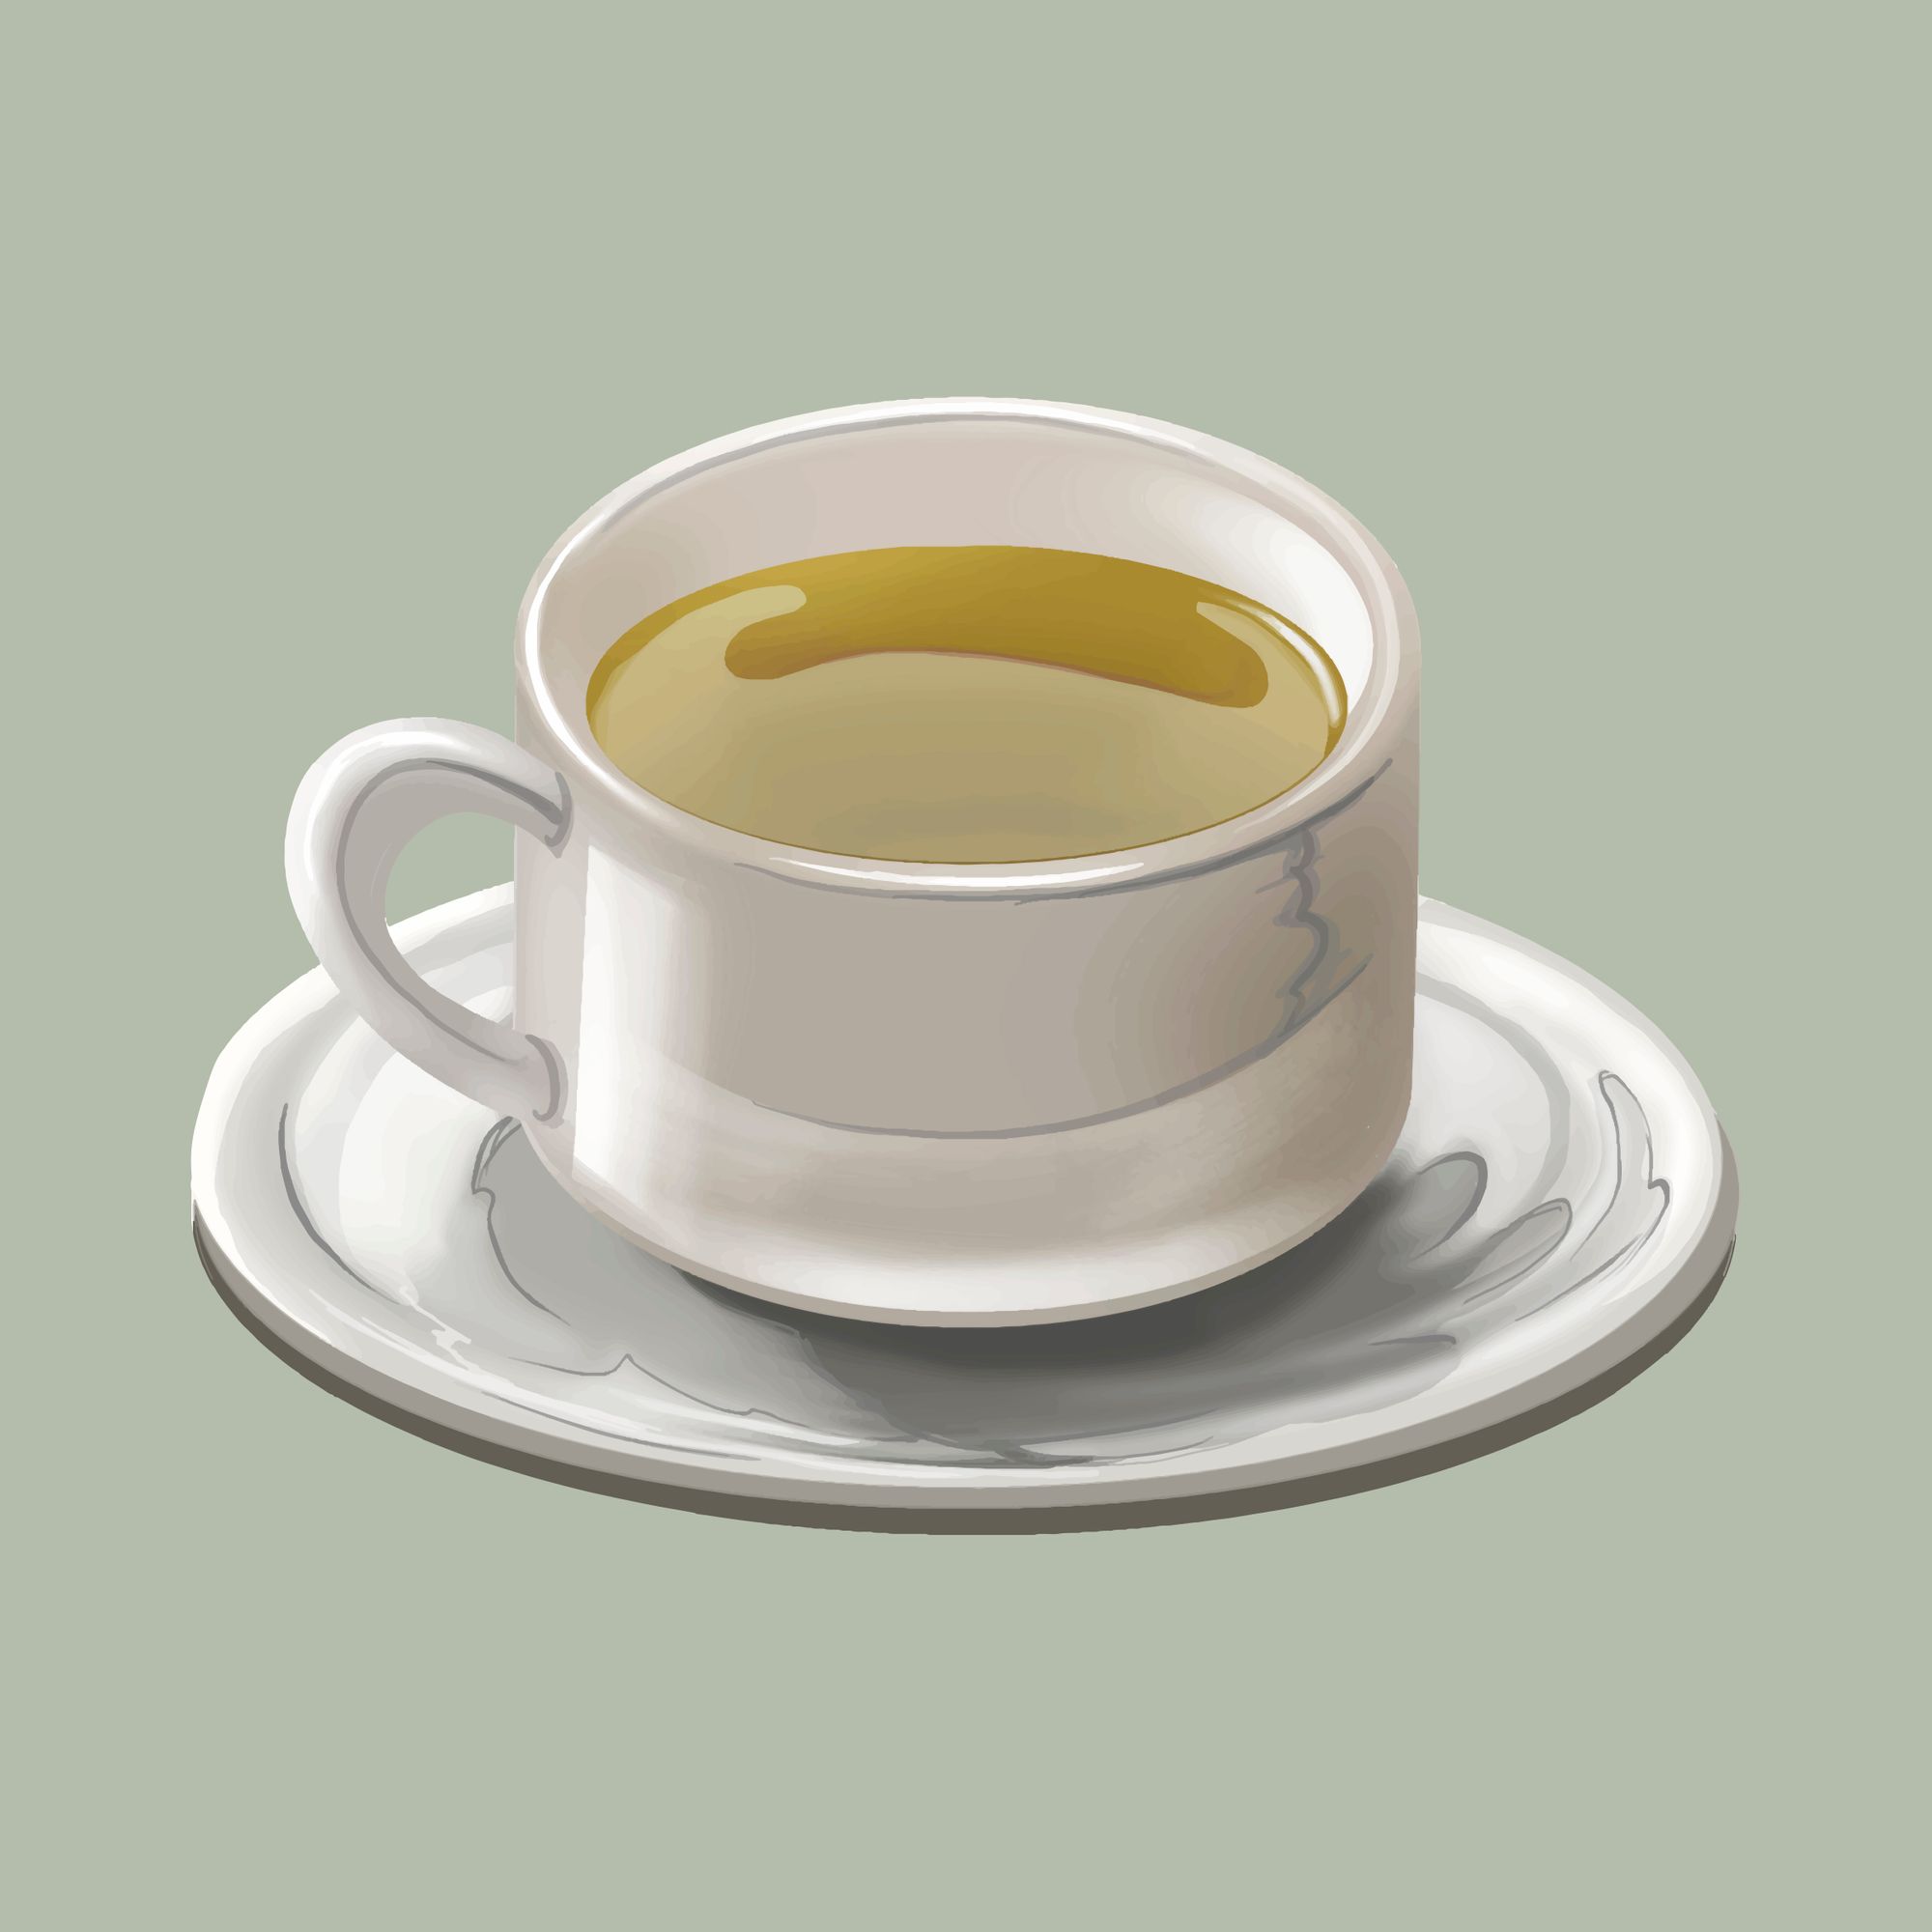 Tea-image-from-rawpixel-id-449900-jpeg